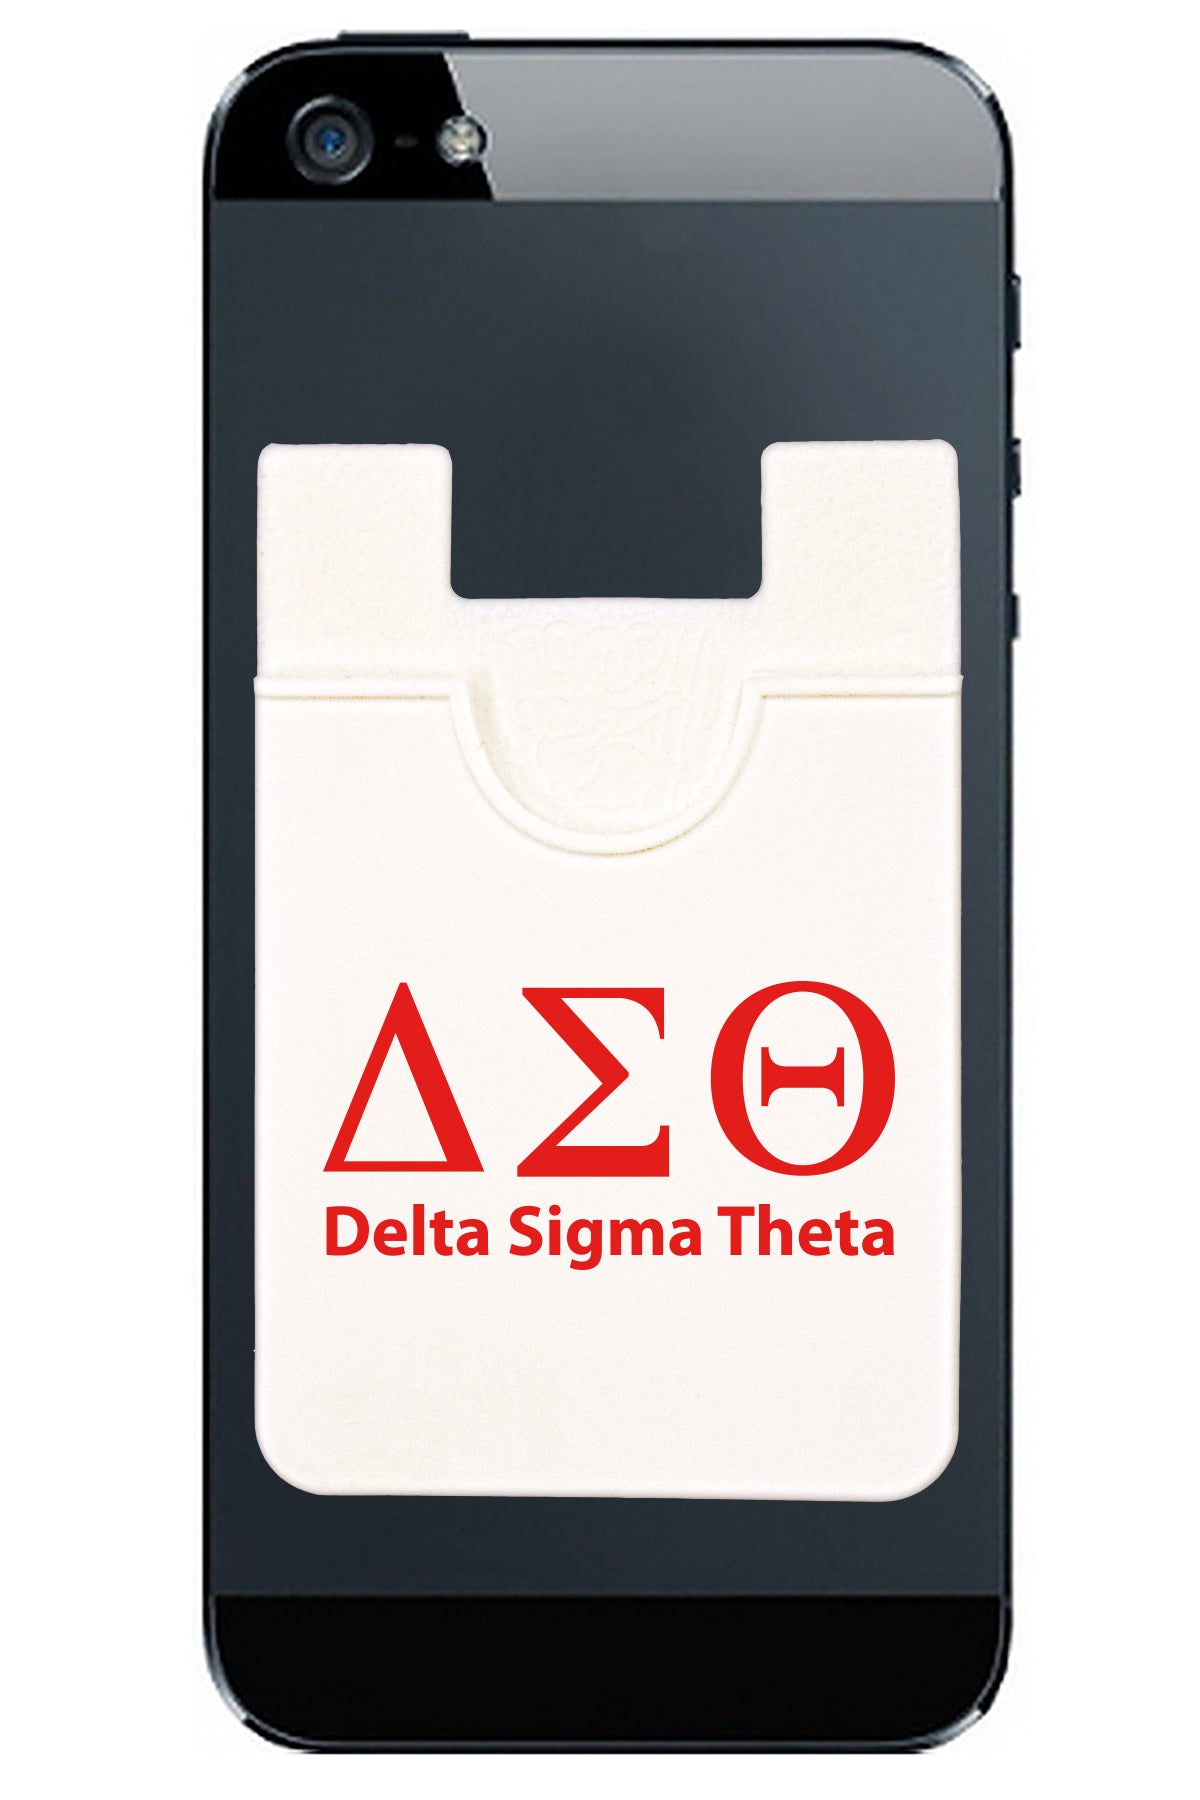 Delta Sigma Theta Koala Pouch - Greek Letters Design - Phone Wallet - Virginia Book Company